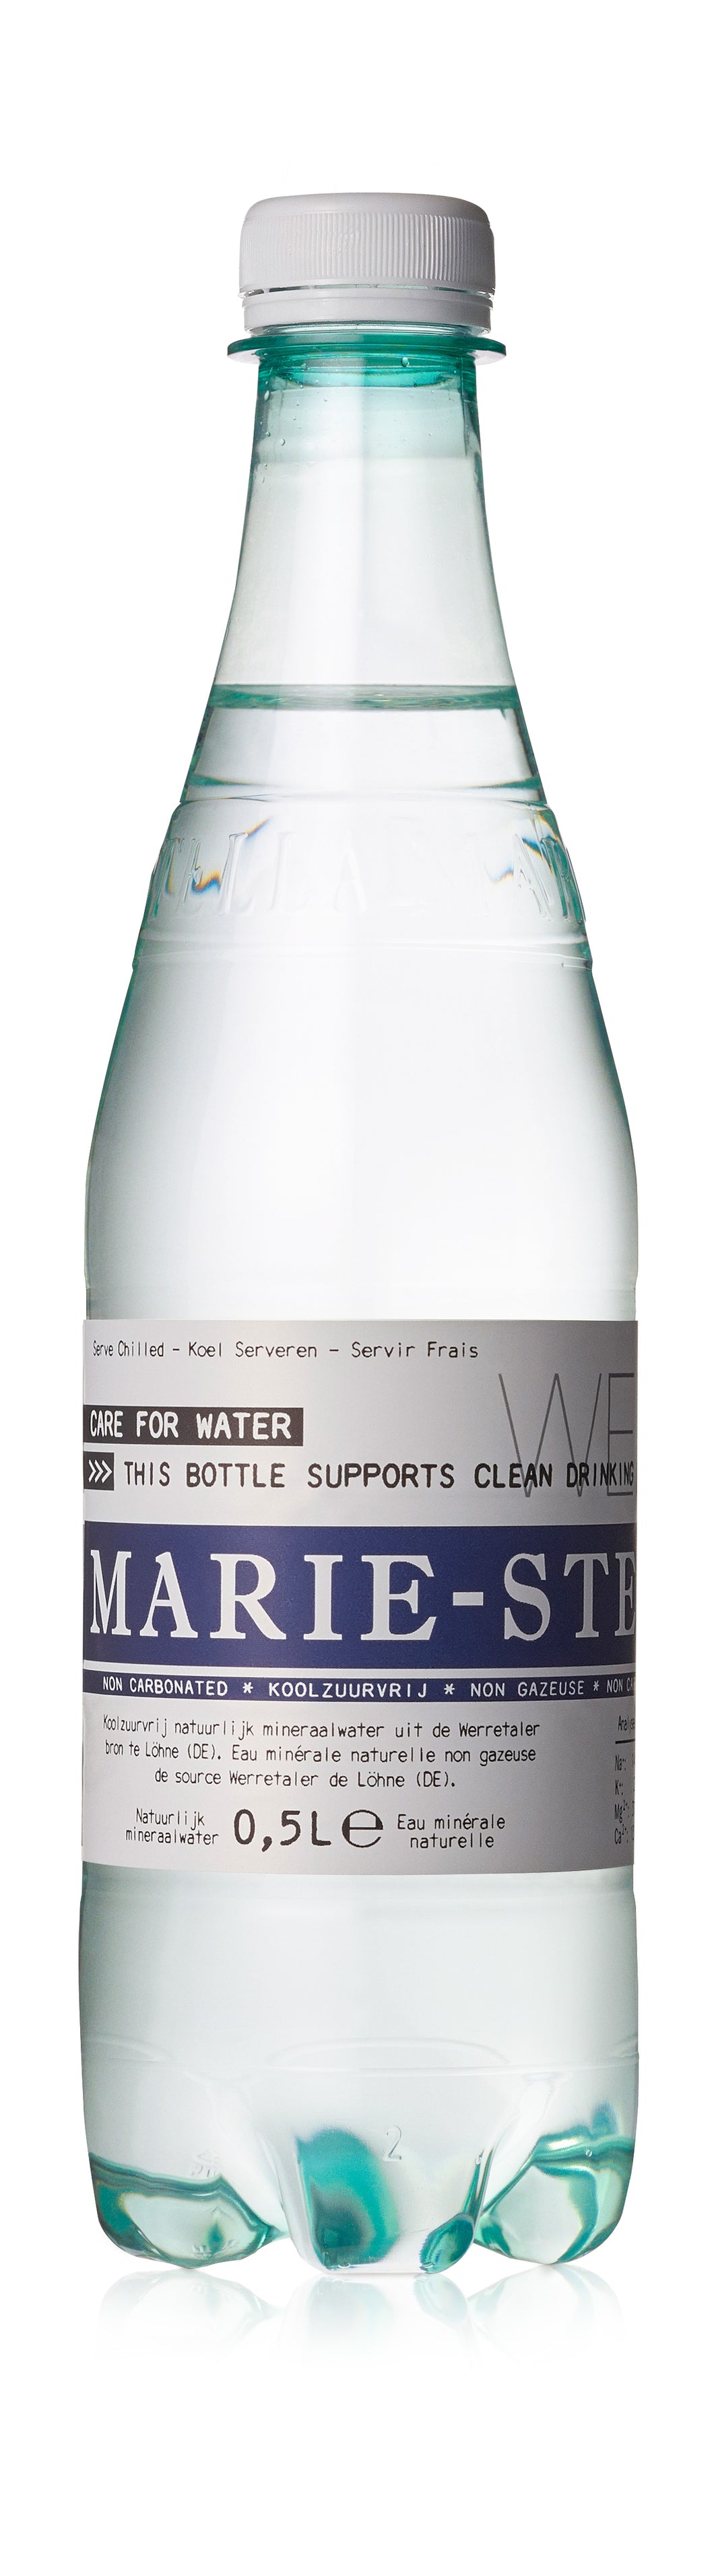 MARIE-STELLA-MARIS Still Water 50 cl PET